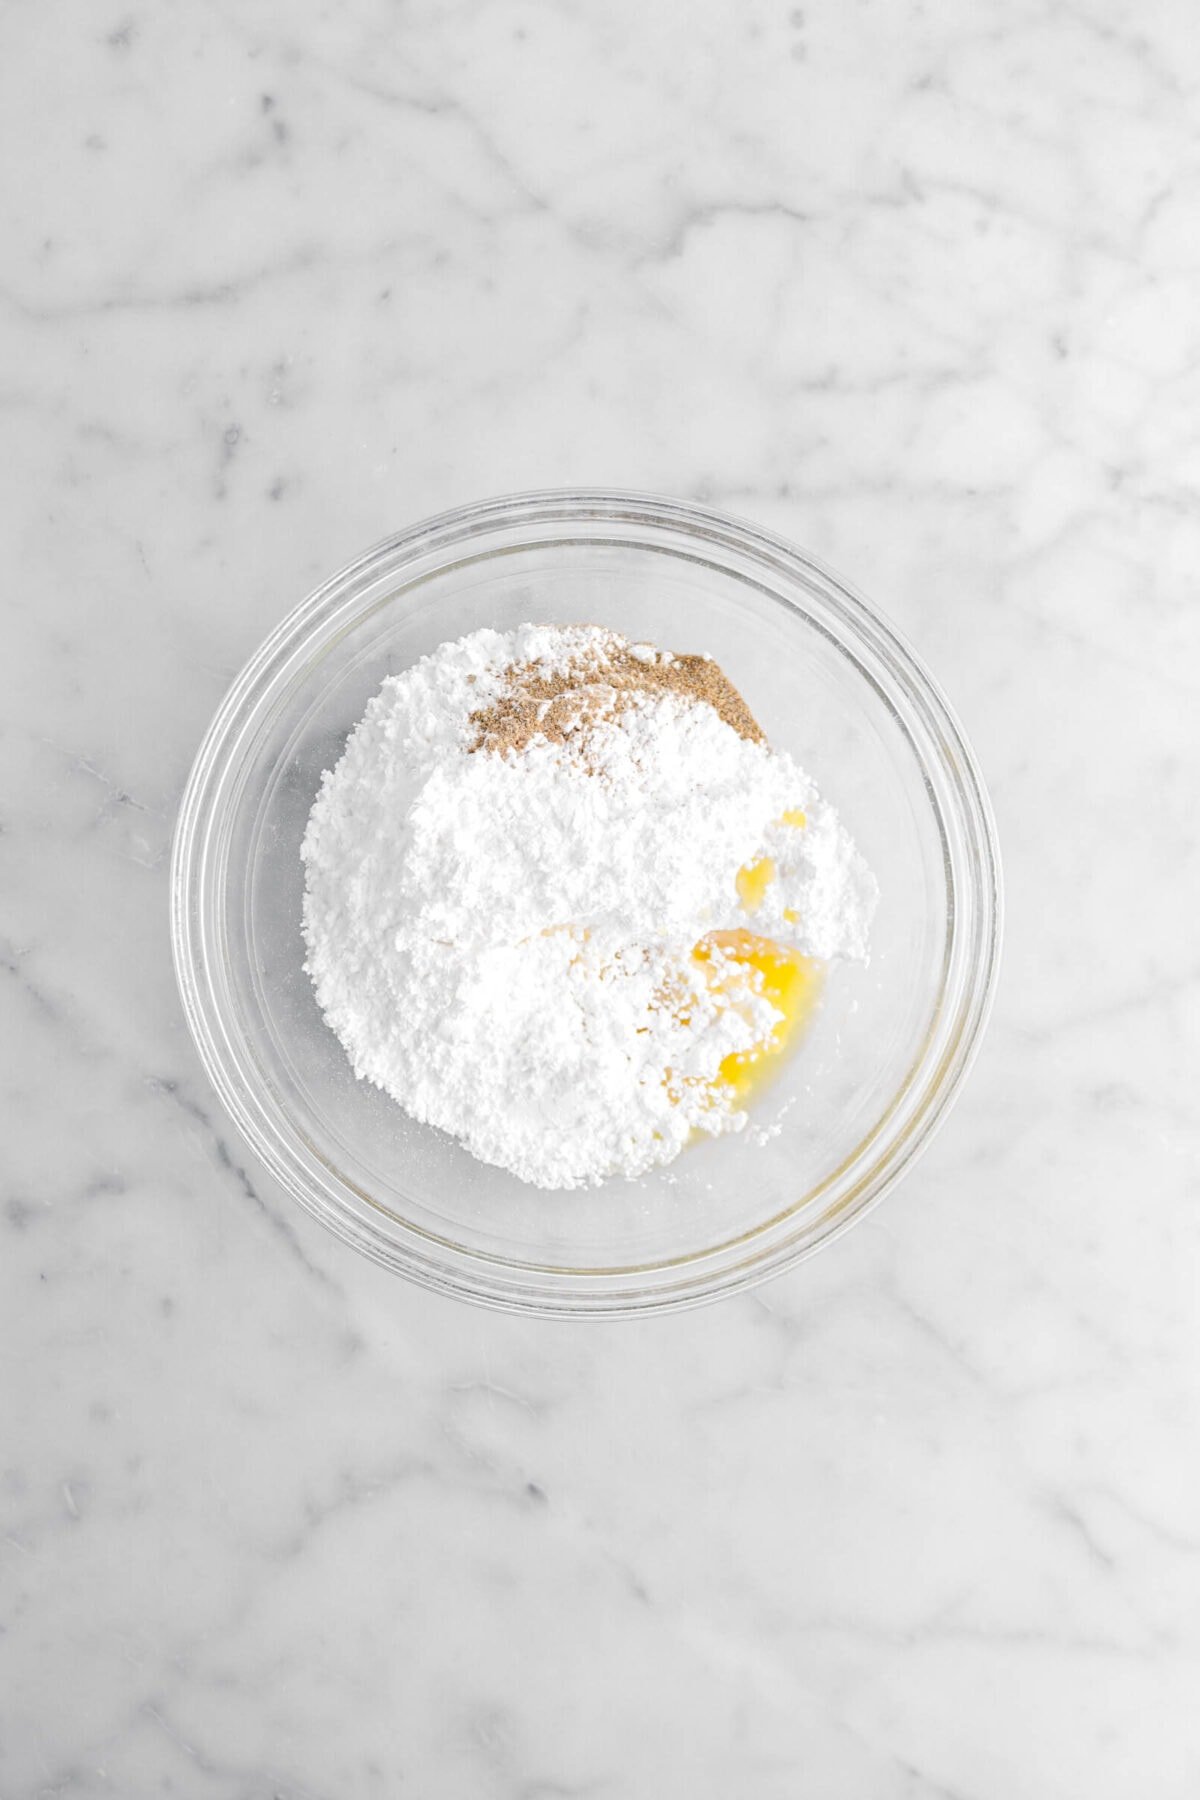 powdered sugar, ground cardamom, and orange juice in glass bowl.